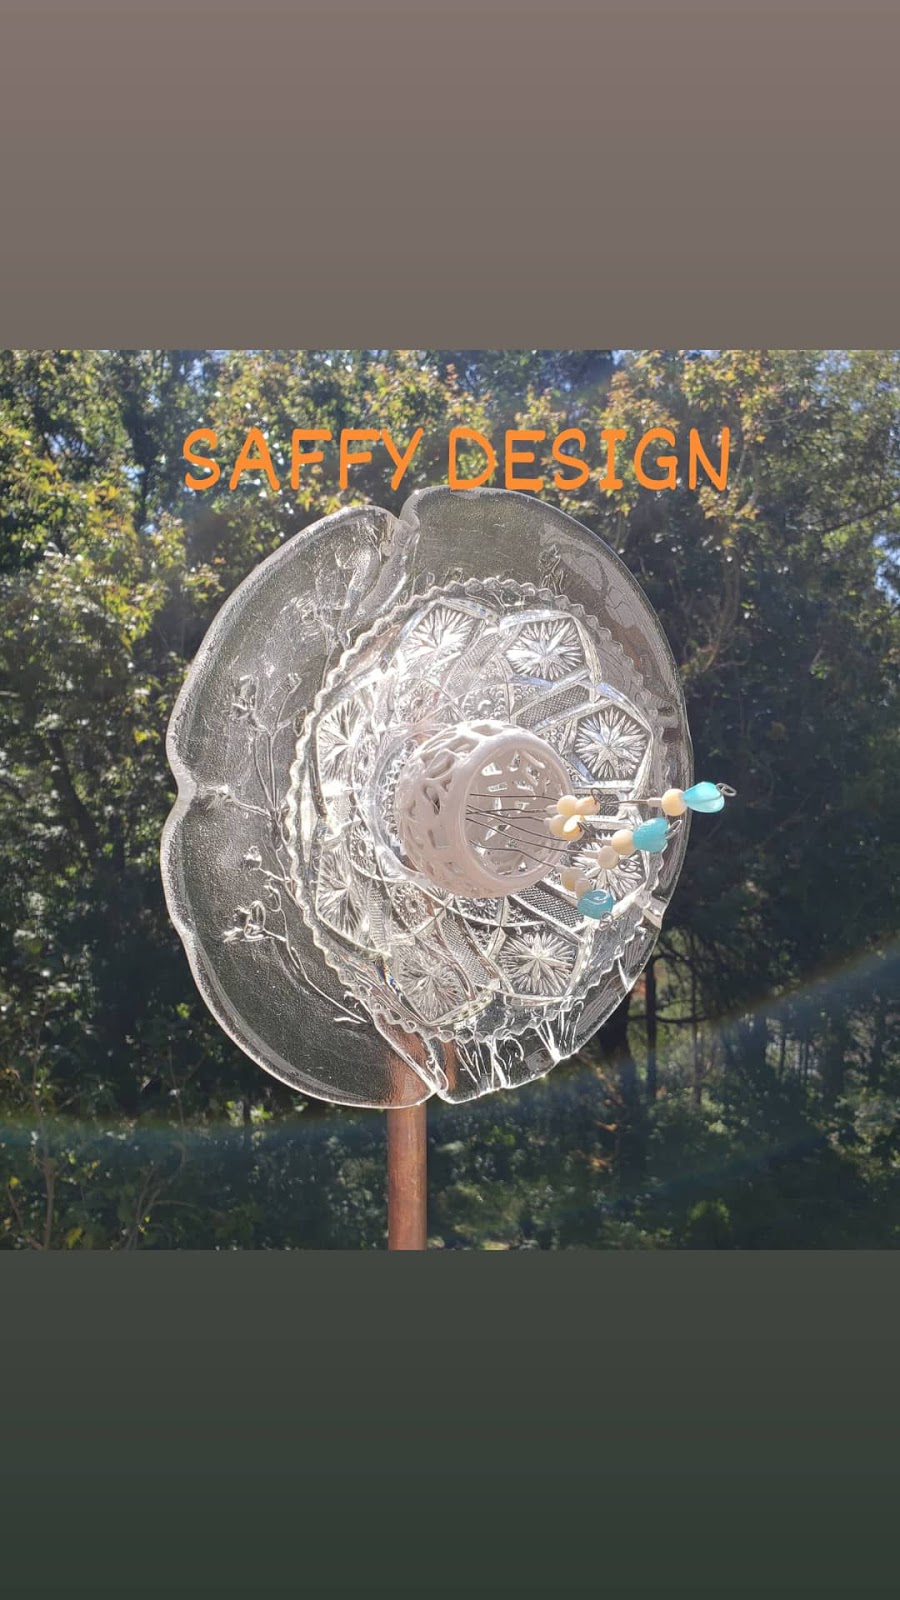 Saffy Design | store | 37 Gleghorn Rd, Kallista VIC 3791, Australia | 0439353039 OR +61 439 353 039